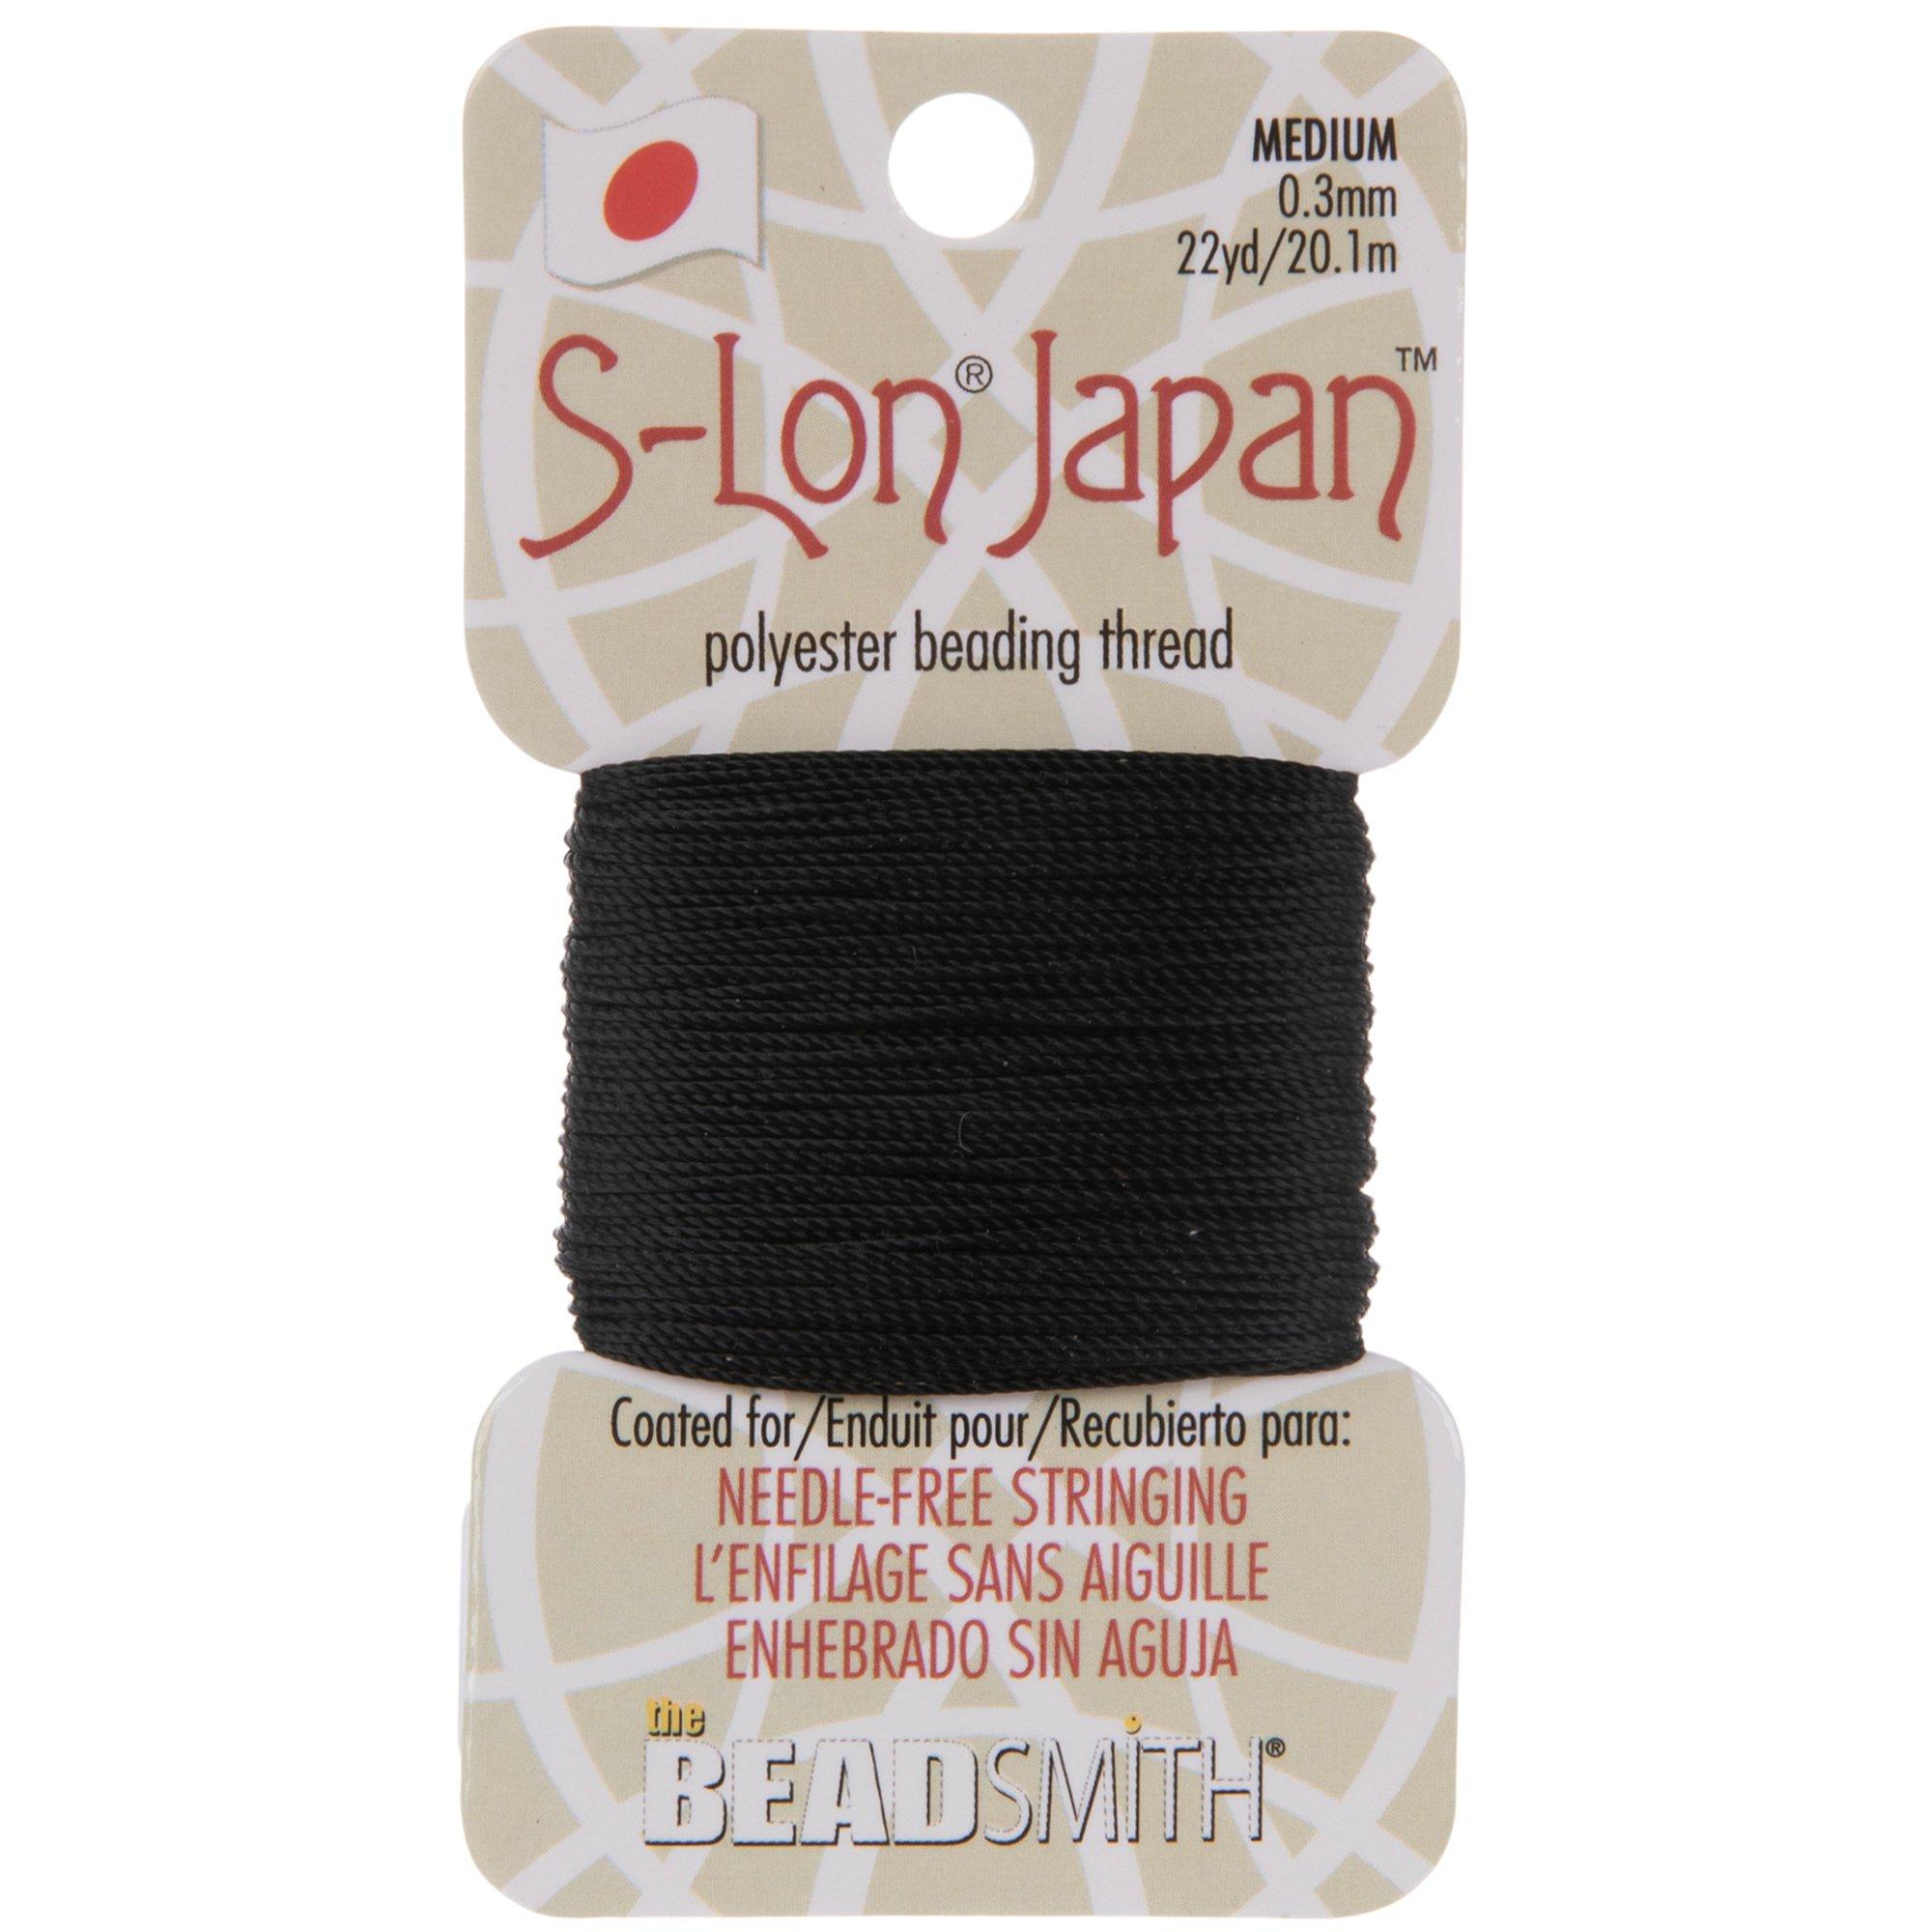 S-Lon (Superlon) Nylon Beading Thread - Size D- TEX45 - 78 Yards